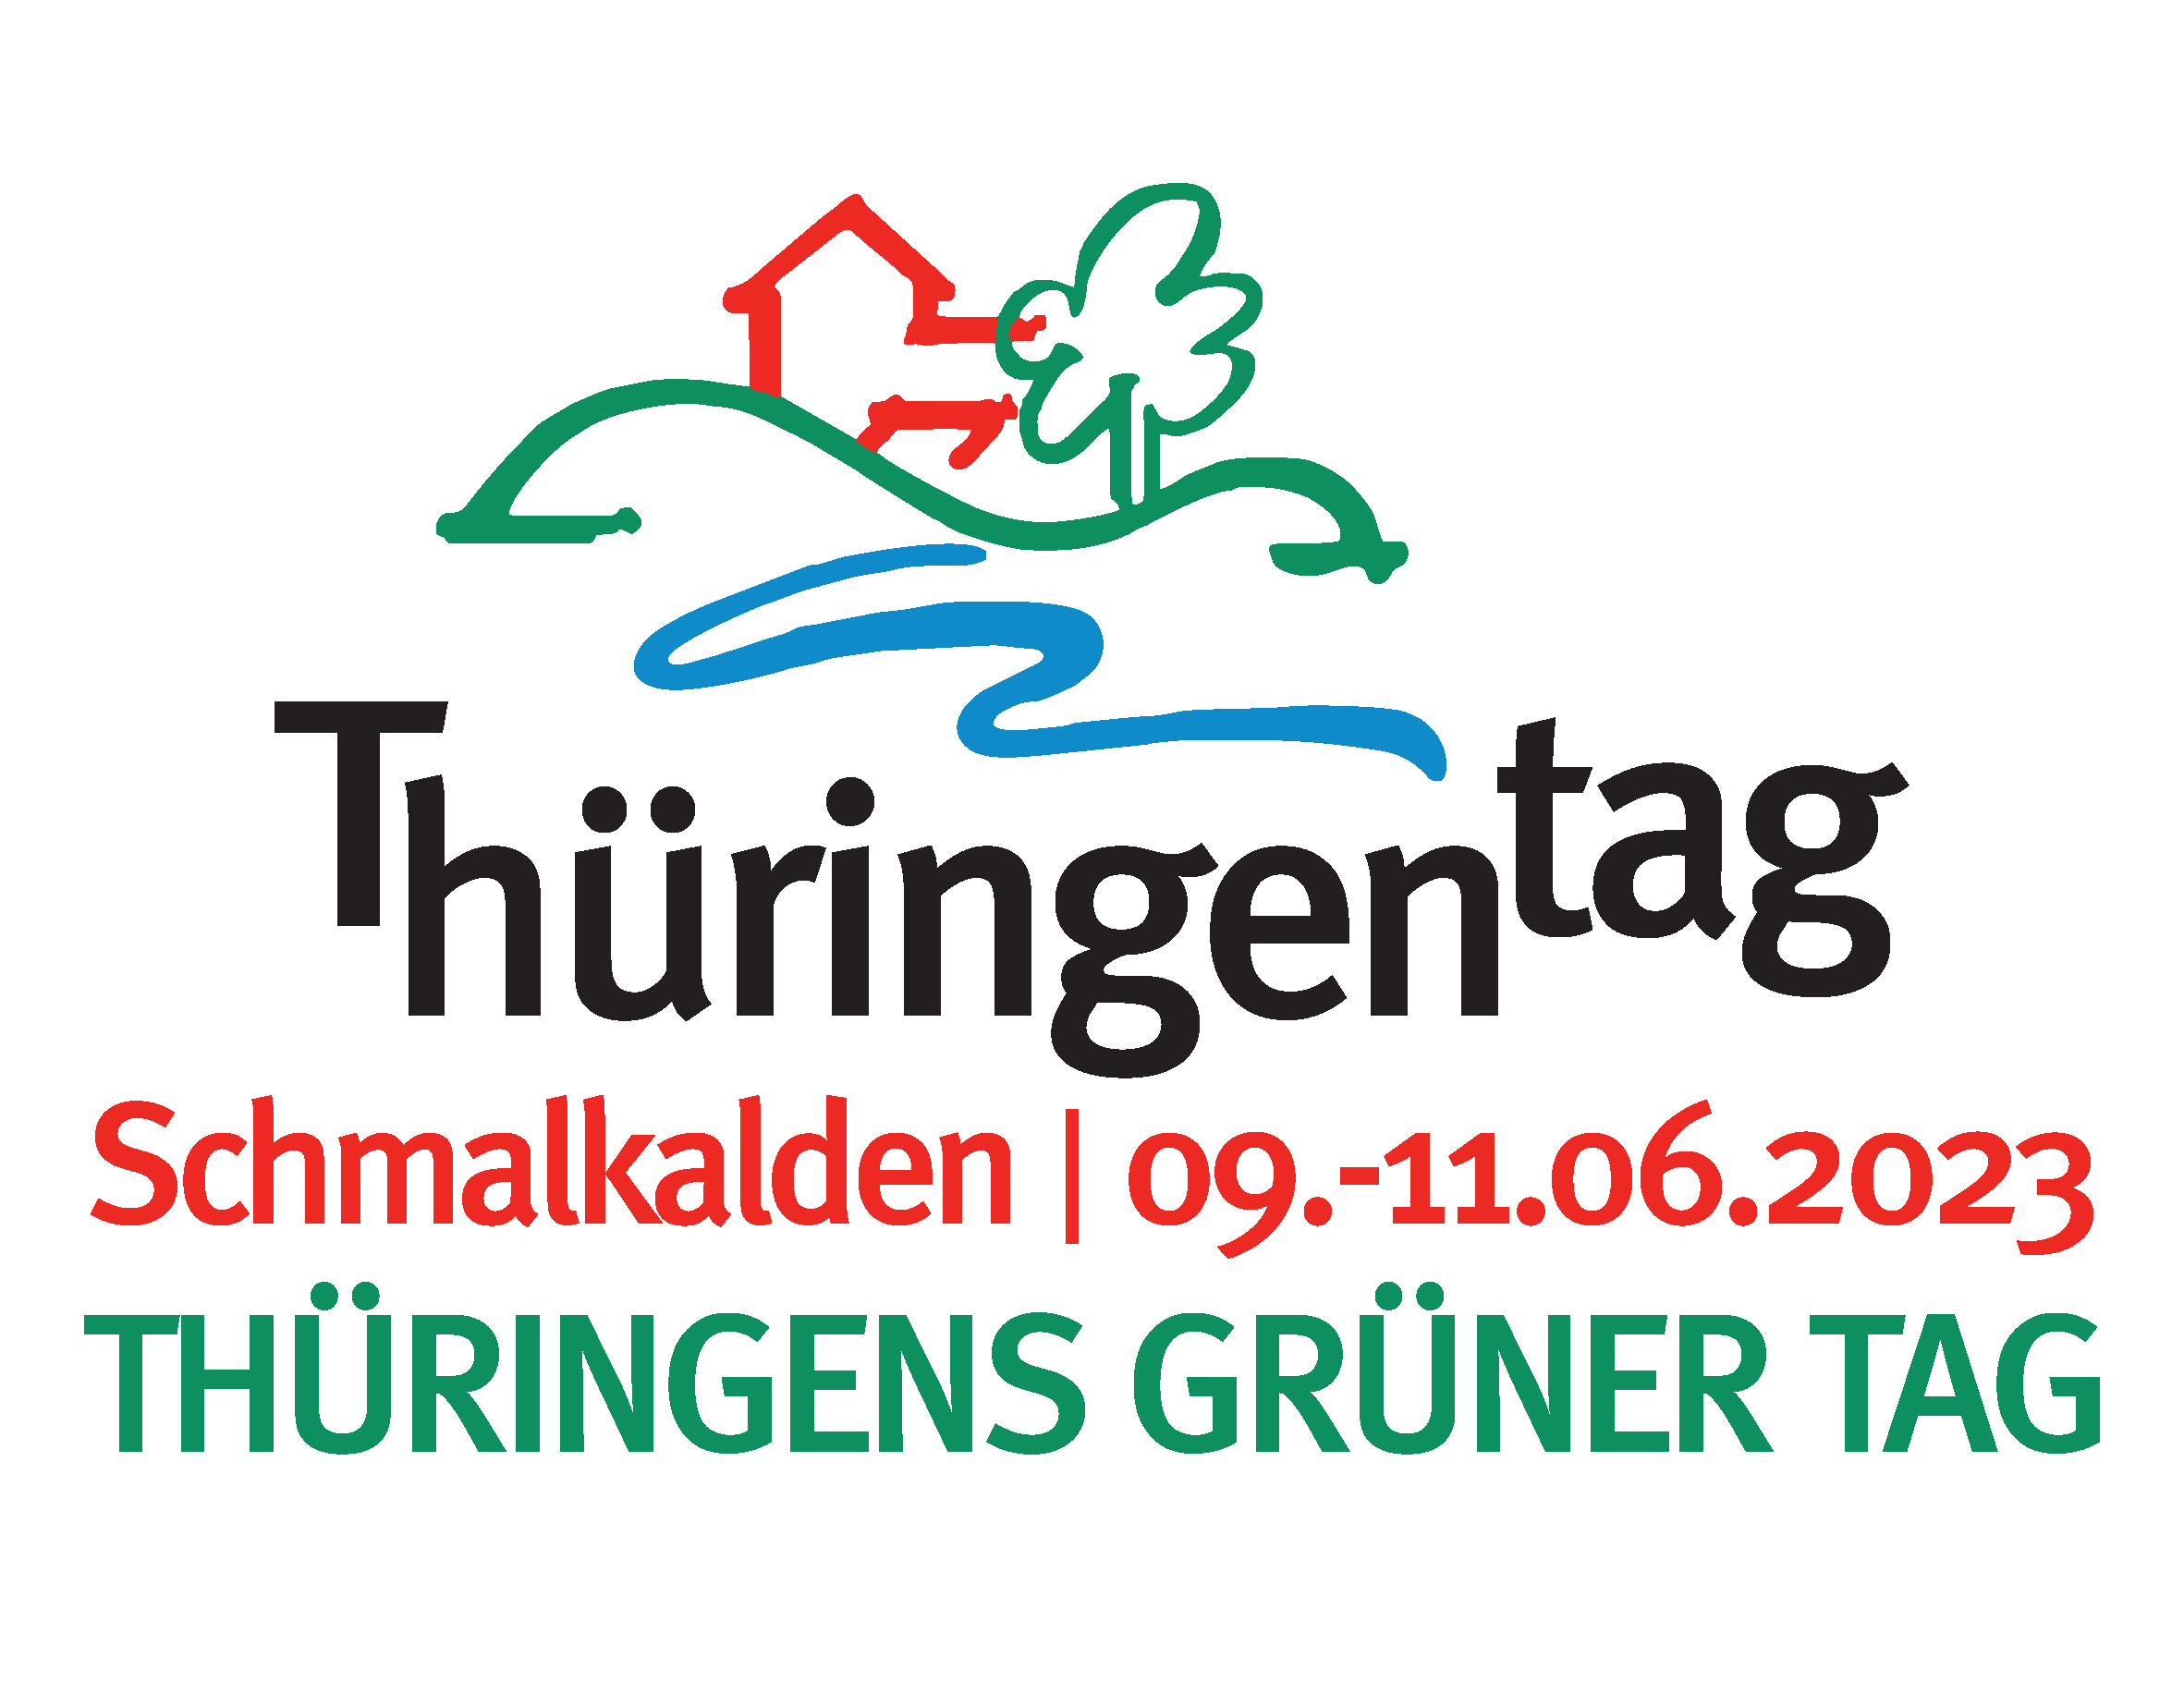  Thüringentag in Schmalkalden